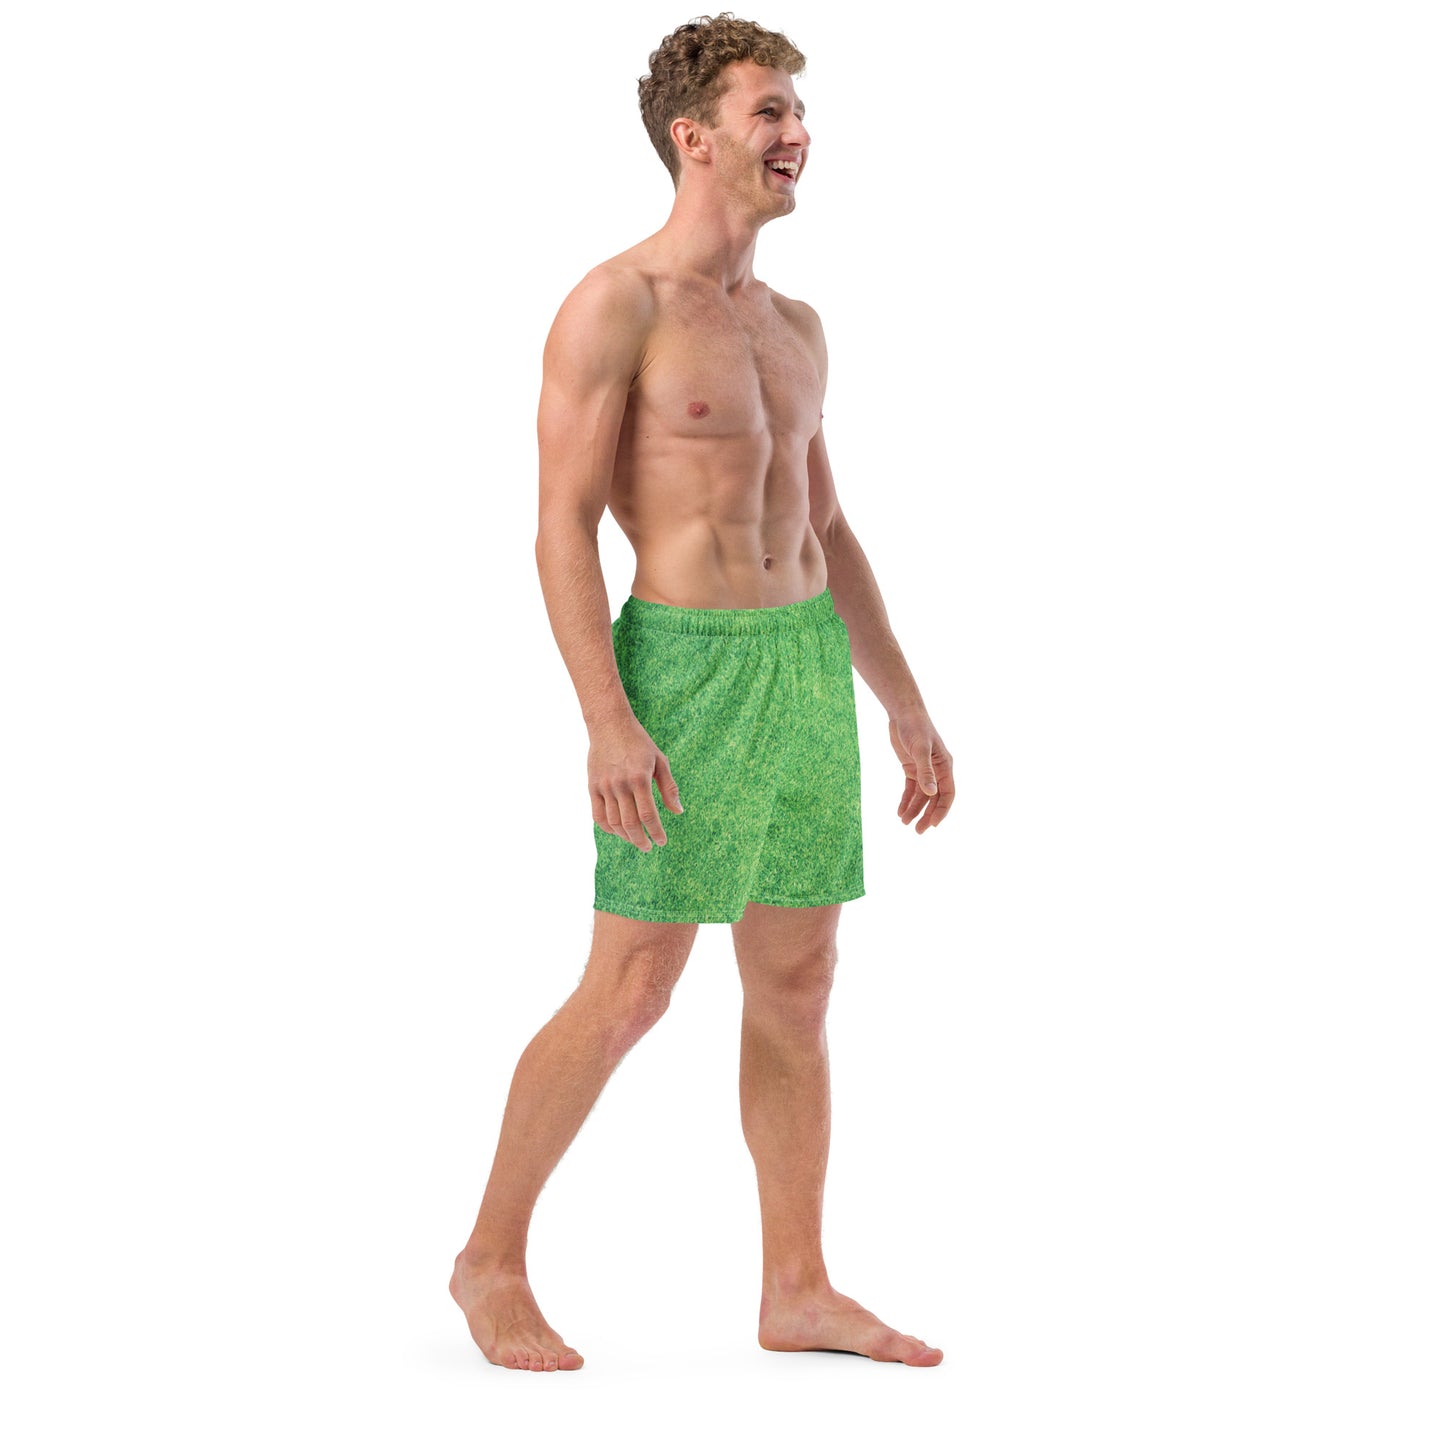 Men’s Swim Trunks - Putting Green